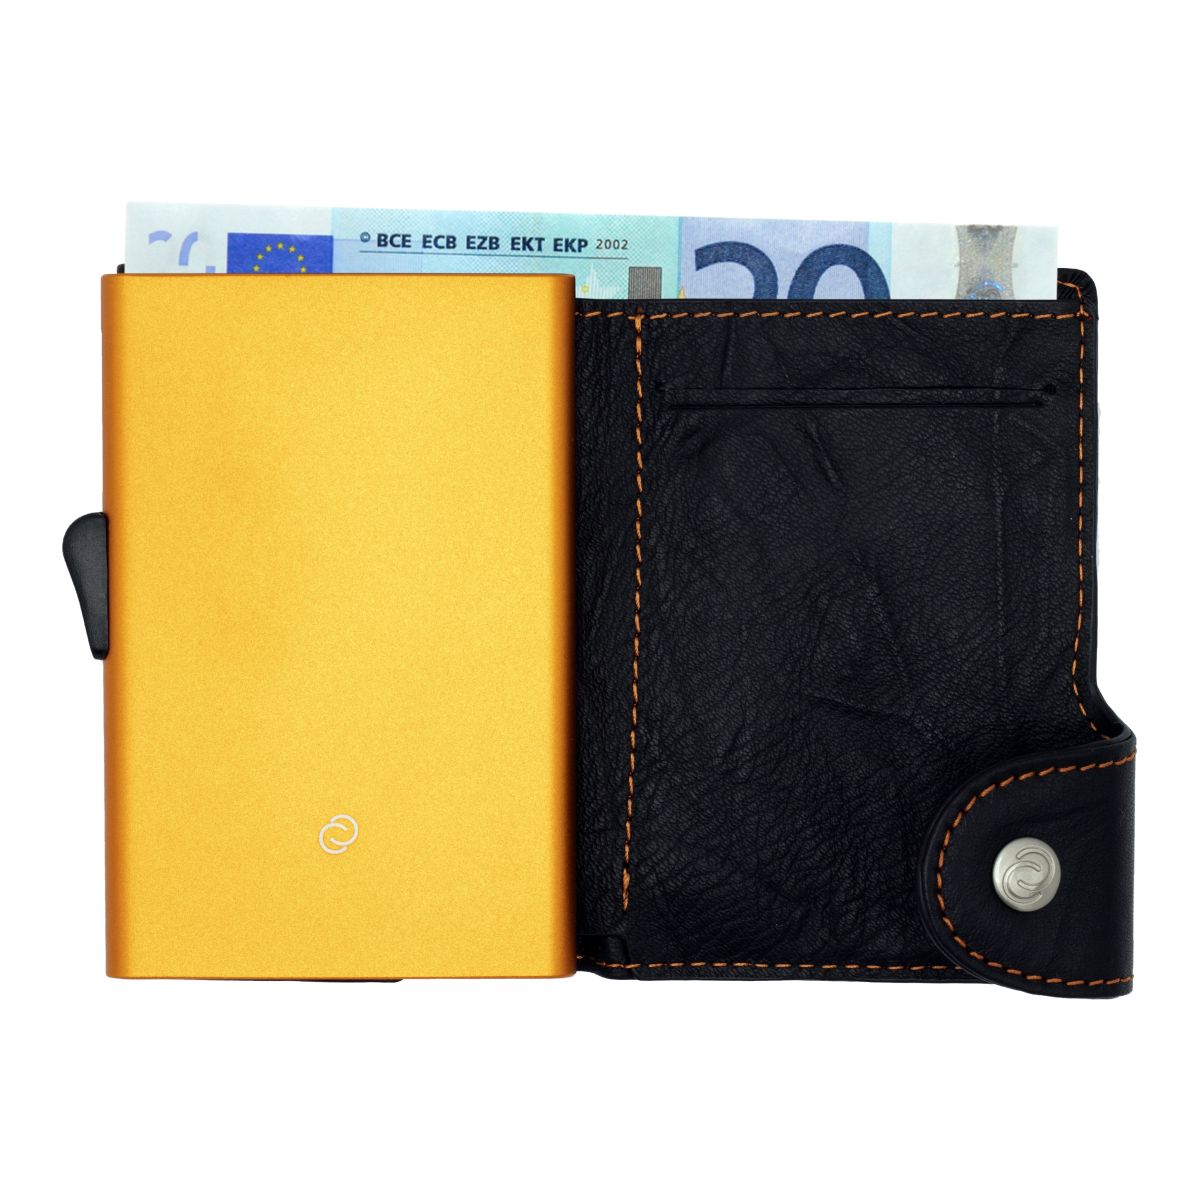 C-Secure Aluminum Card Holder with Genuine Leather - Black / Orange